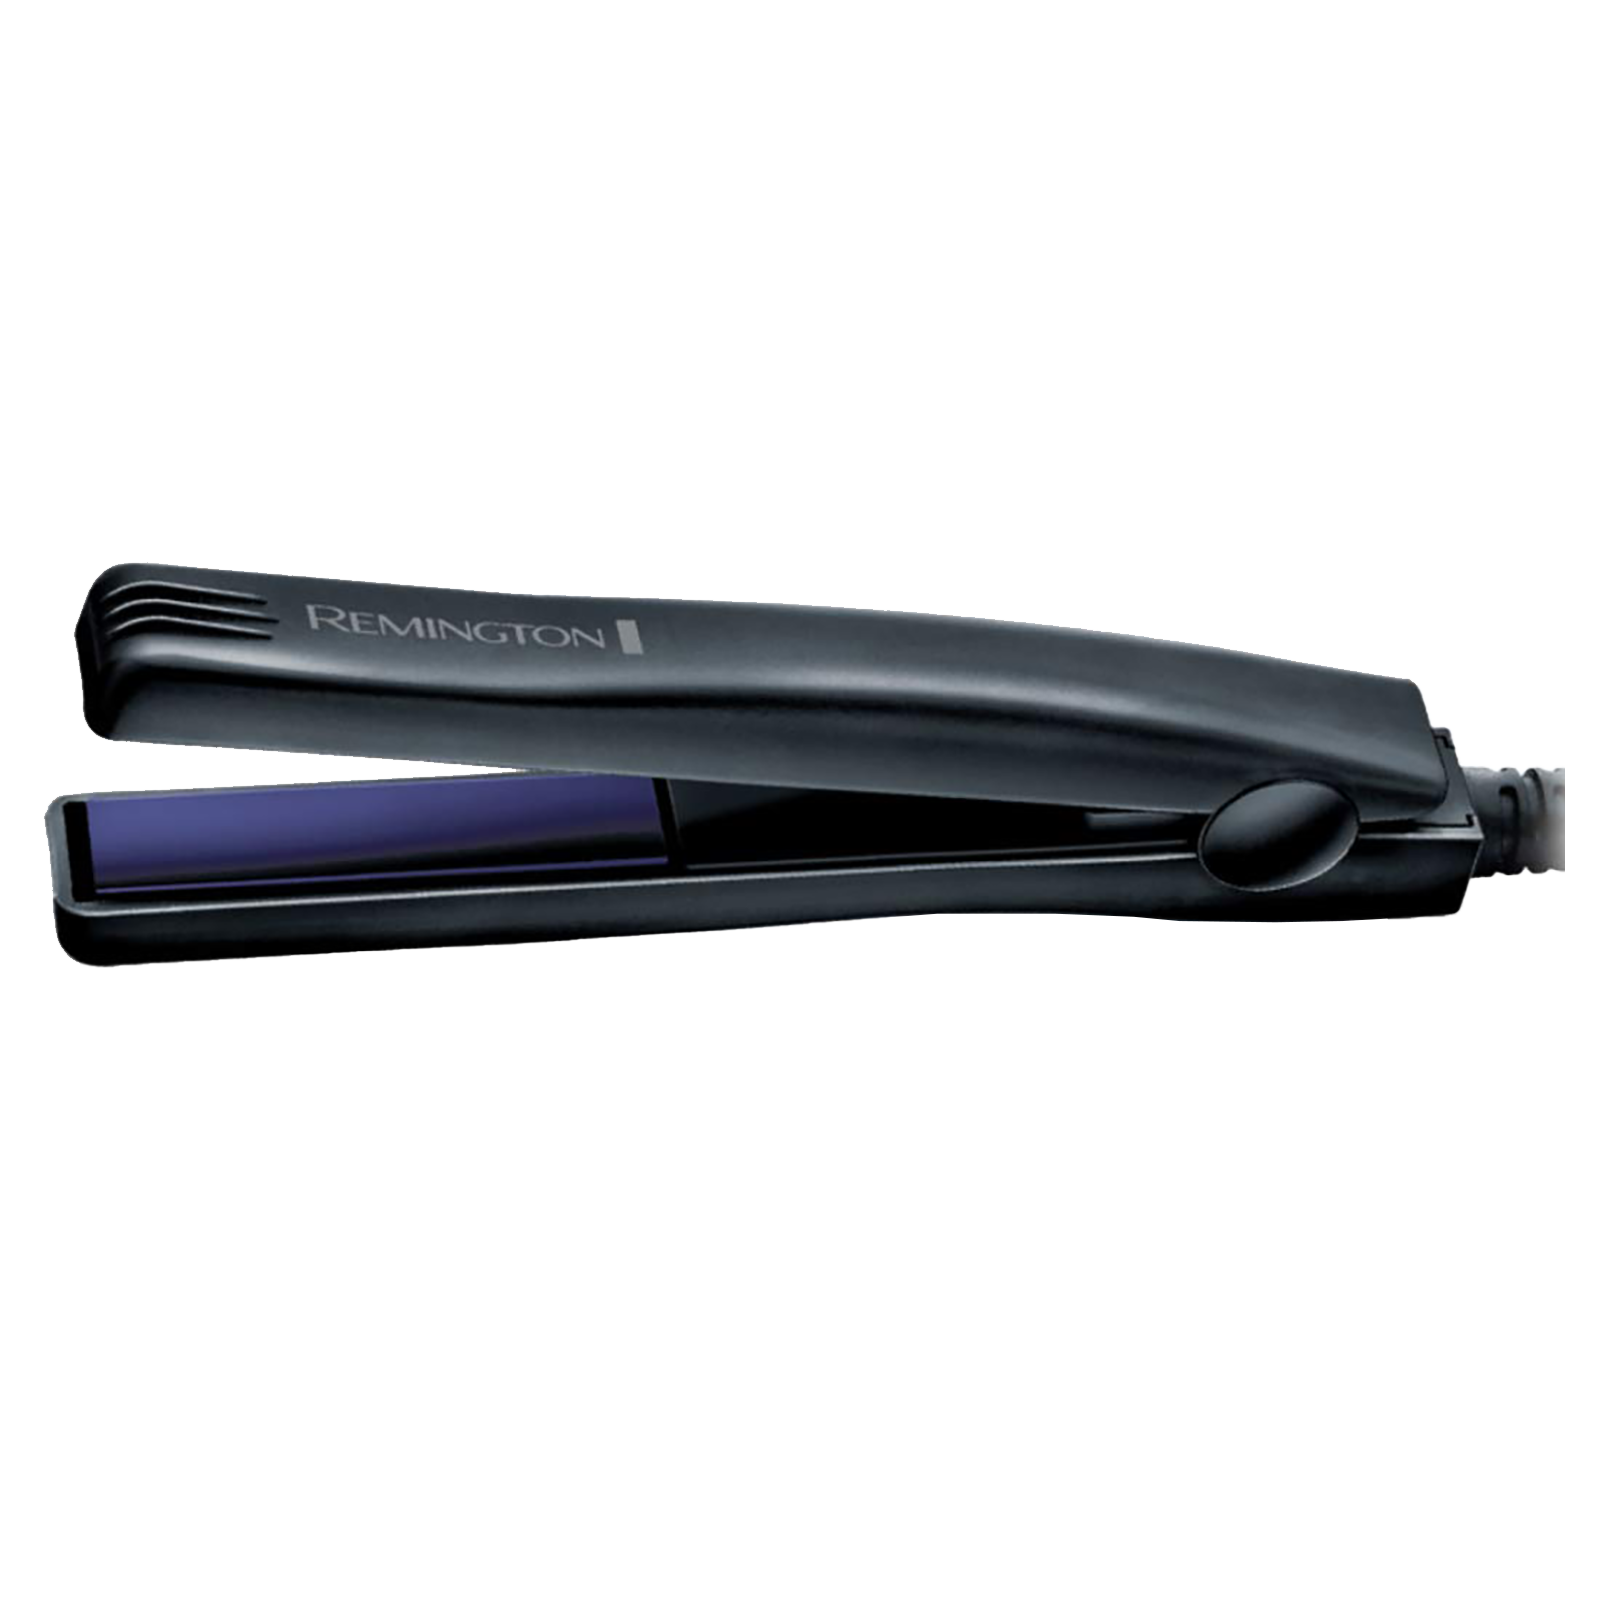 Remington Corded Hair Straightener (S2880, Black)